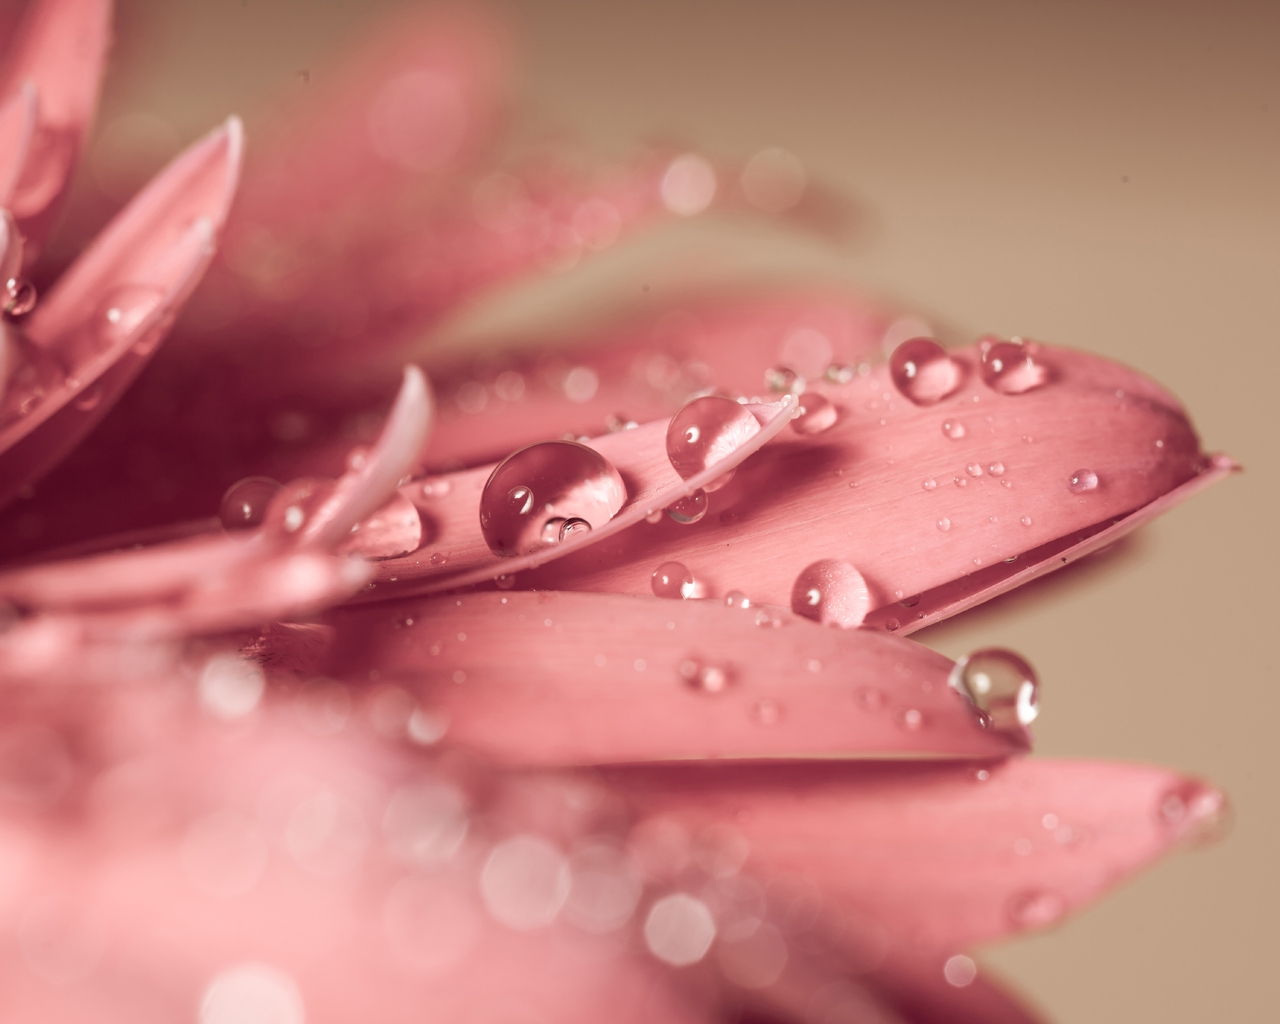 Картинка: Цветок, розовый, лепестки, капли